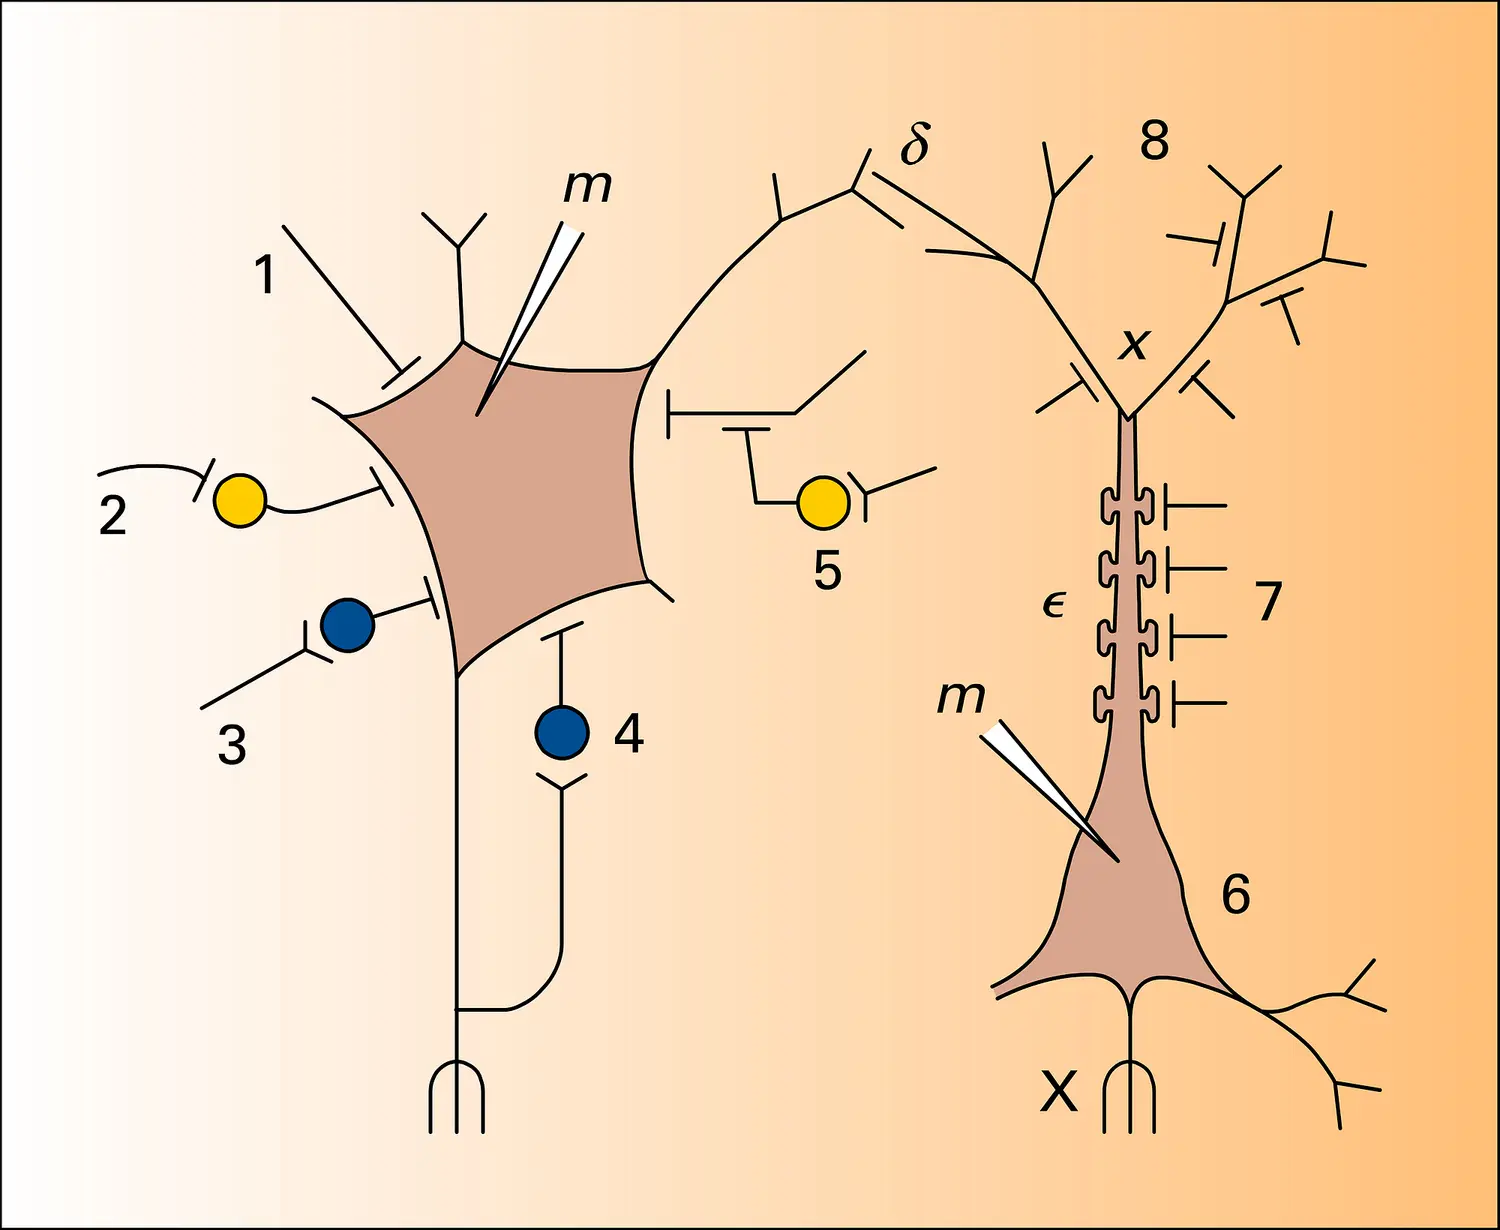 Neurone moteur de la moelle